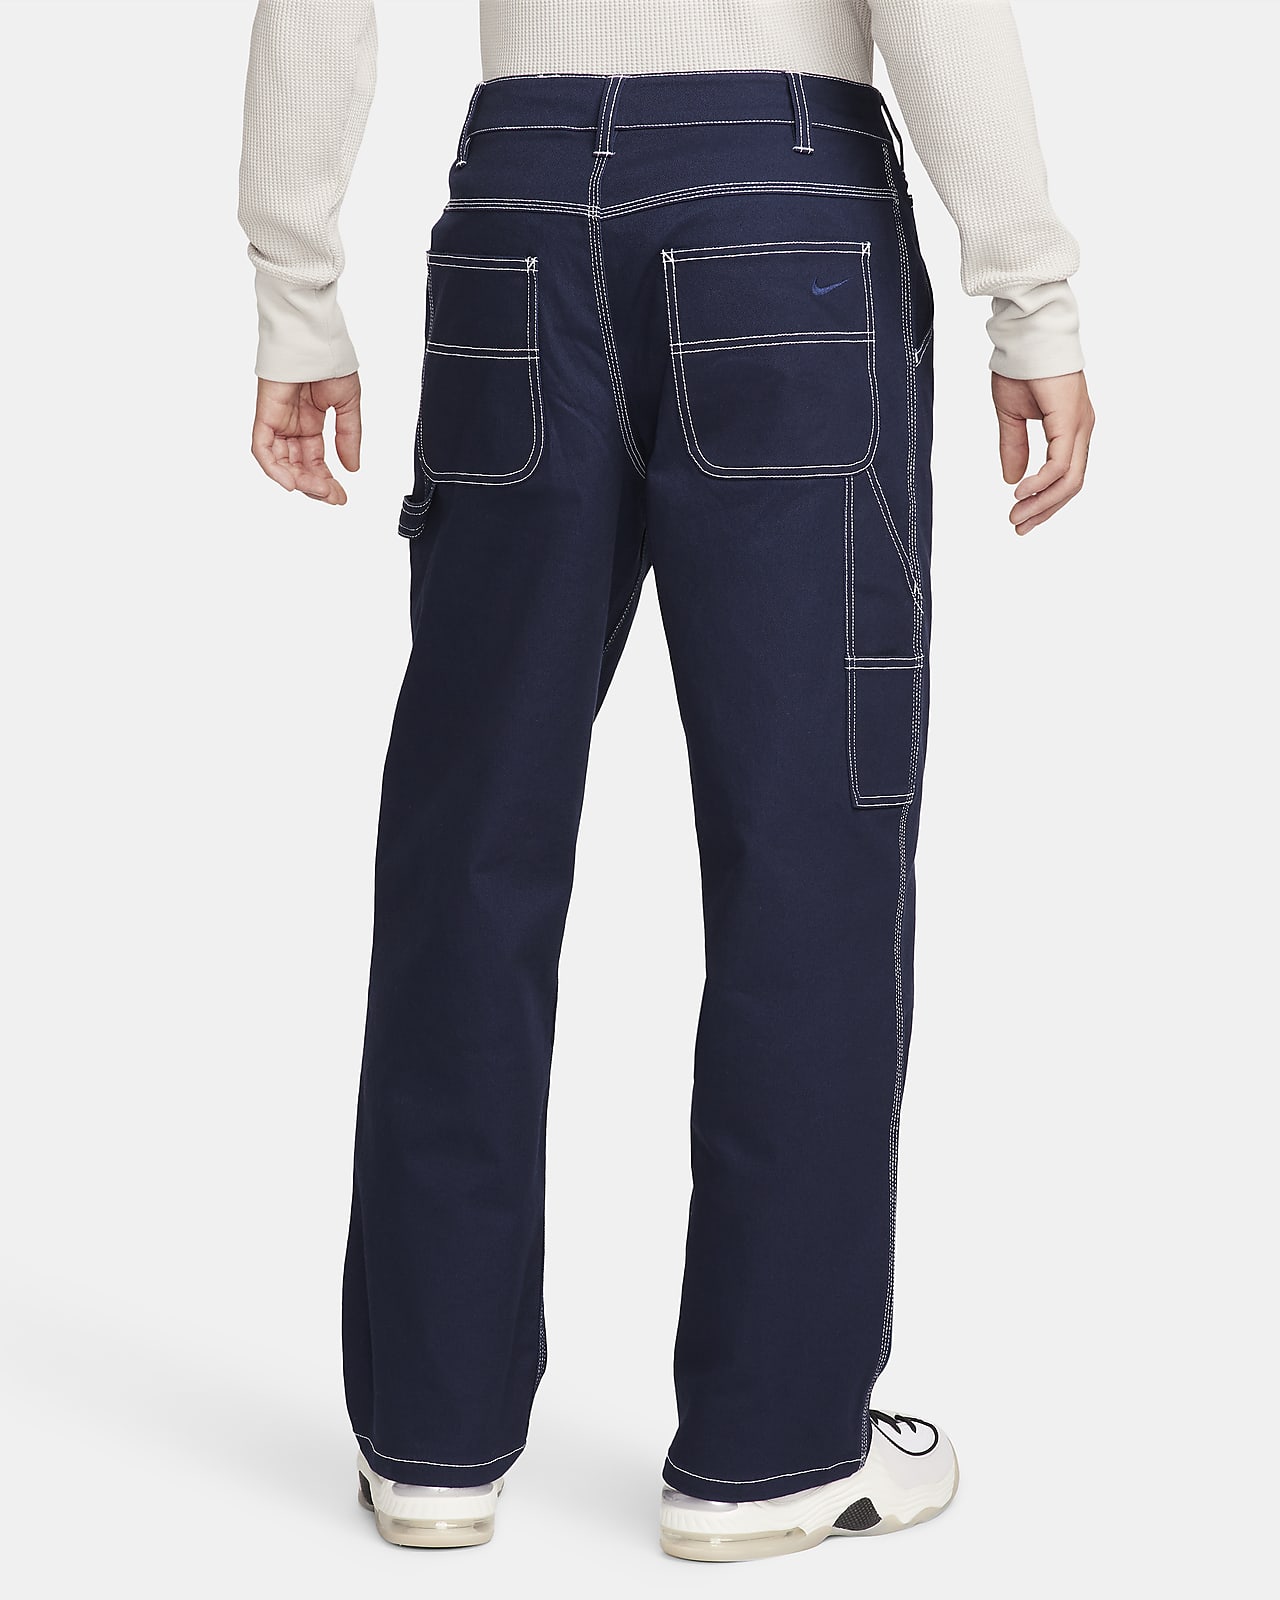 Nike Life Workwear Double Panel Carpenter Pants Size 36 Brown Carhartt  Orig:$199